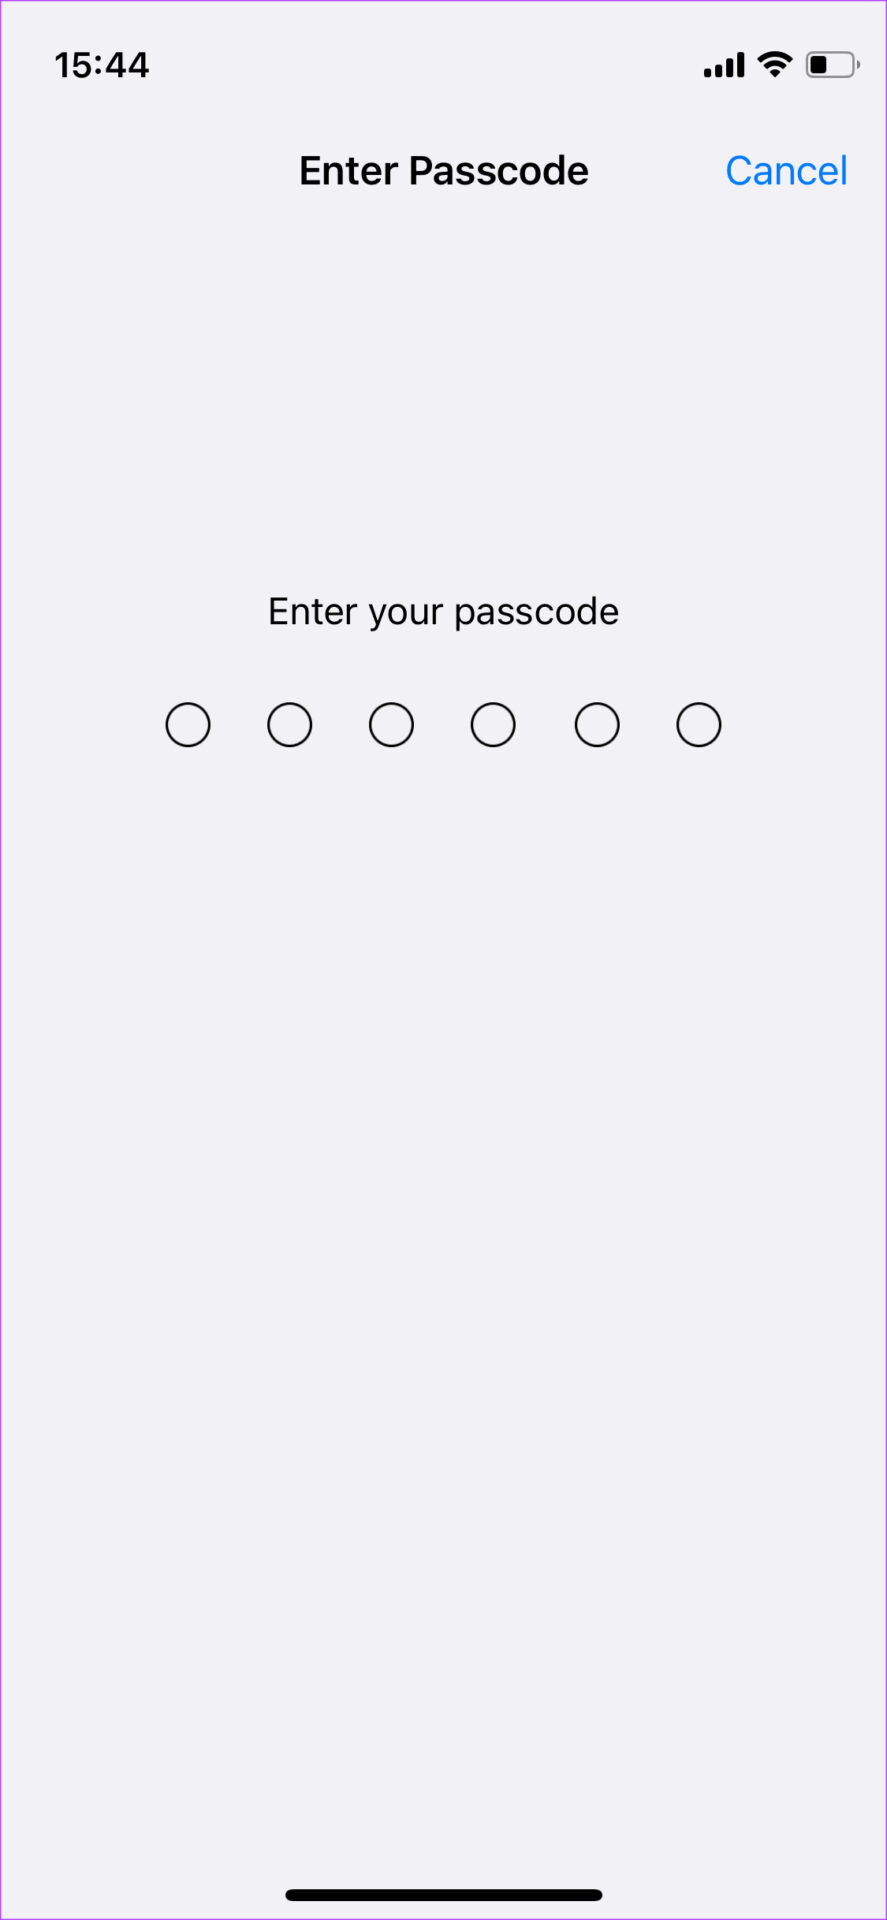 Enter passcode